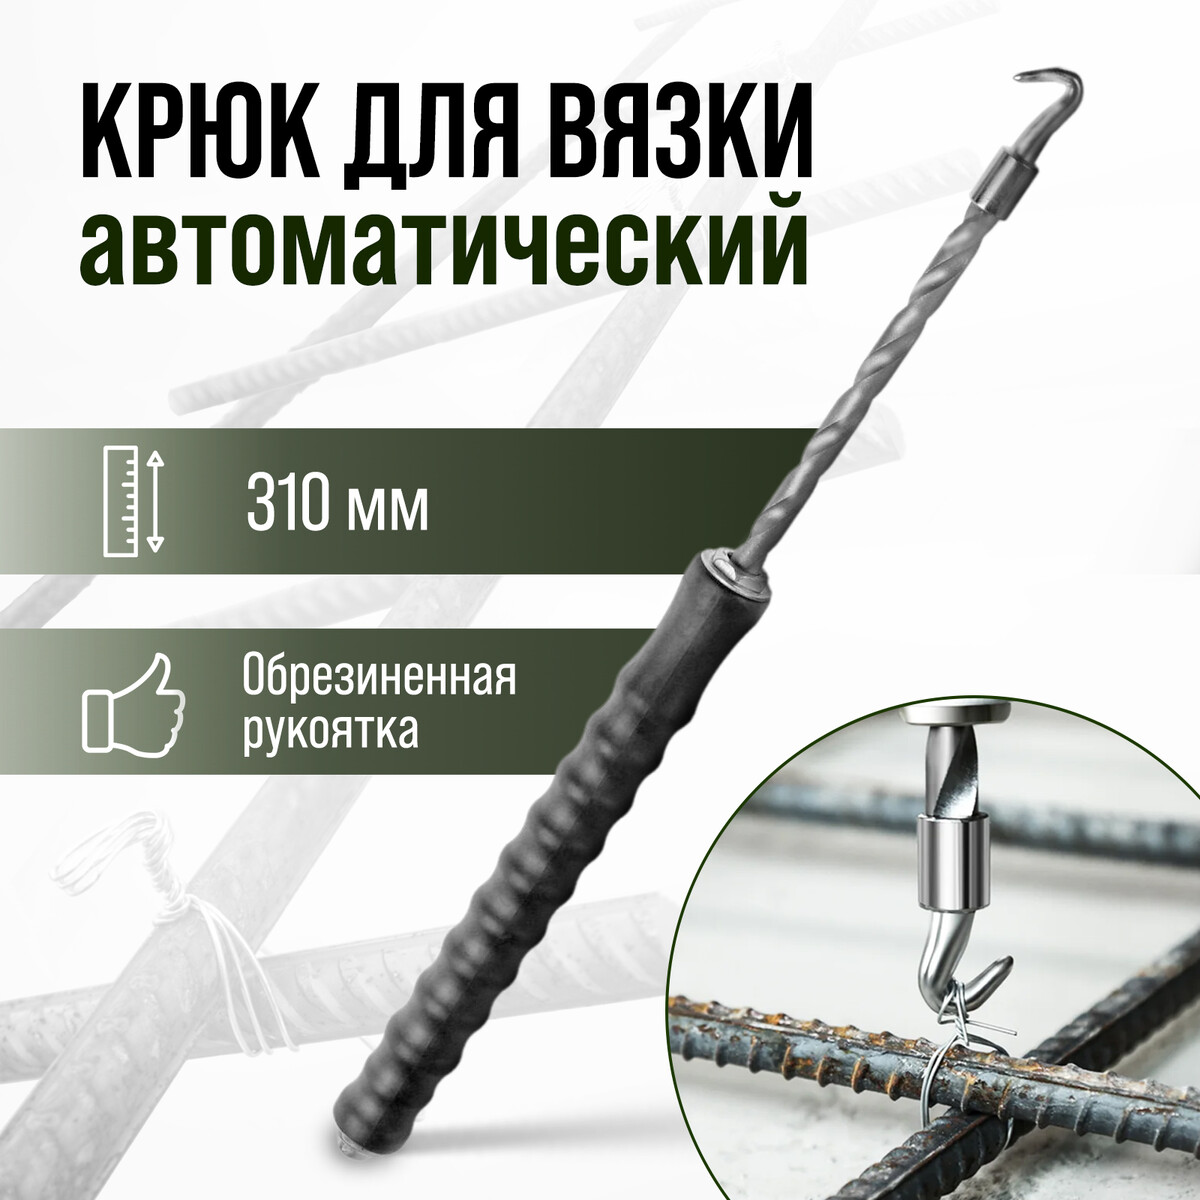 Крюк для вязки арматуры тундра, автоматический, обрезиненная рукоятка, 310 мм ушм тундра обрезиненная рукоятка 1000 вт 11000 об мин 125 мм